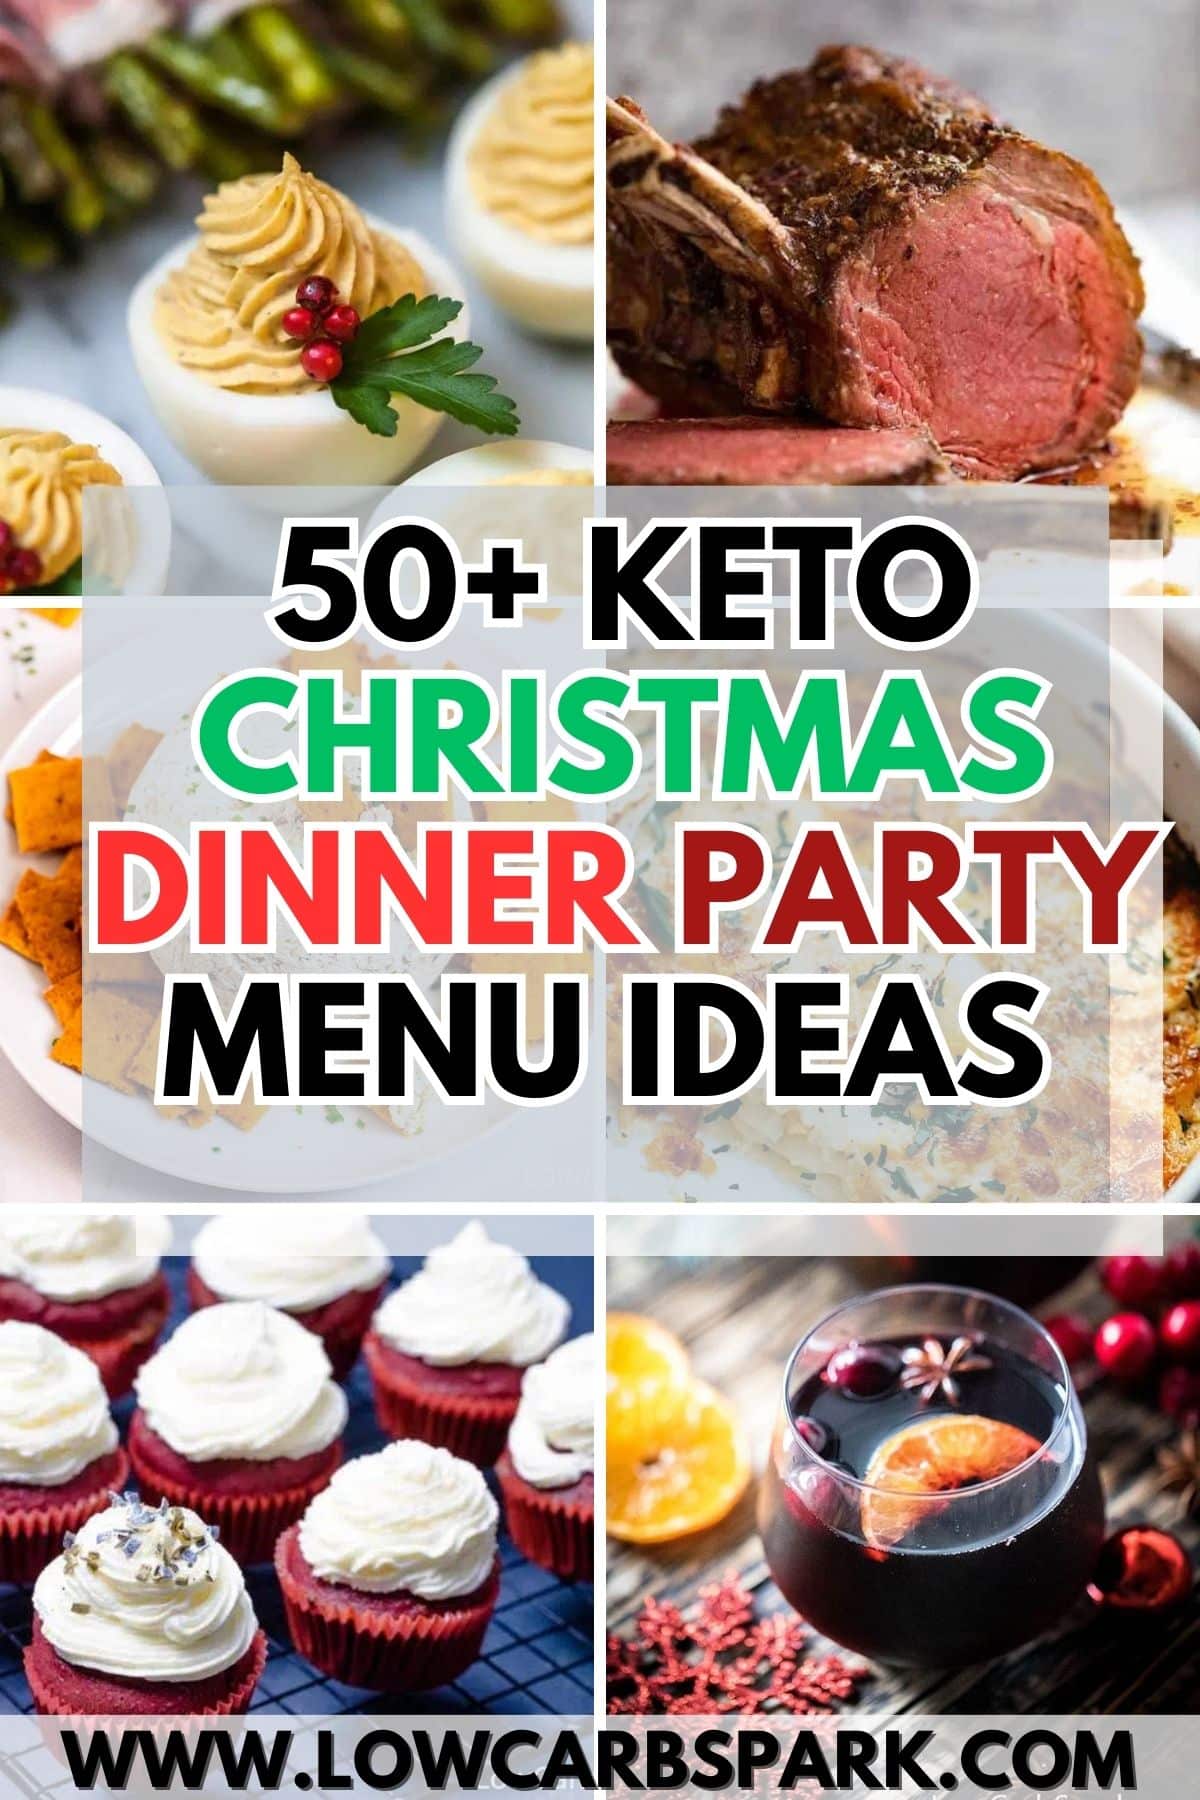 50+ Keto Christmas Dinner Party Menu Ideas 